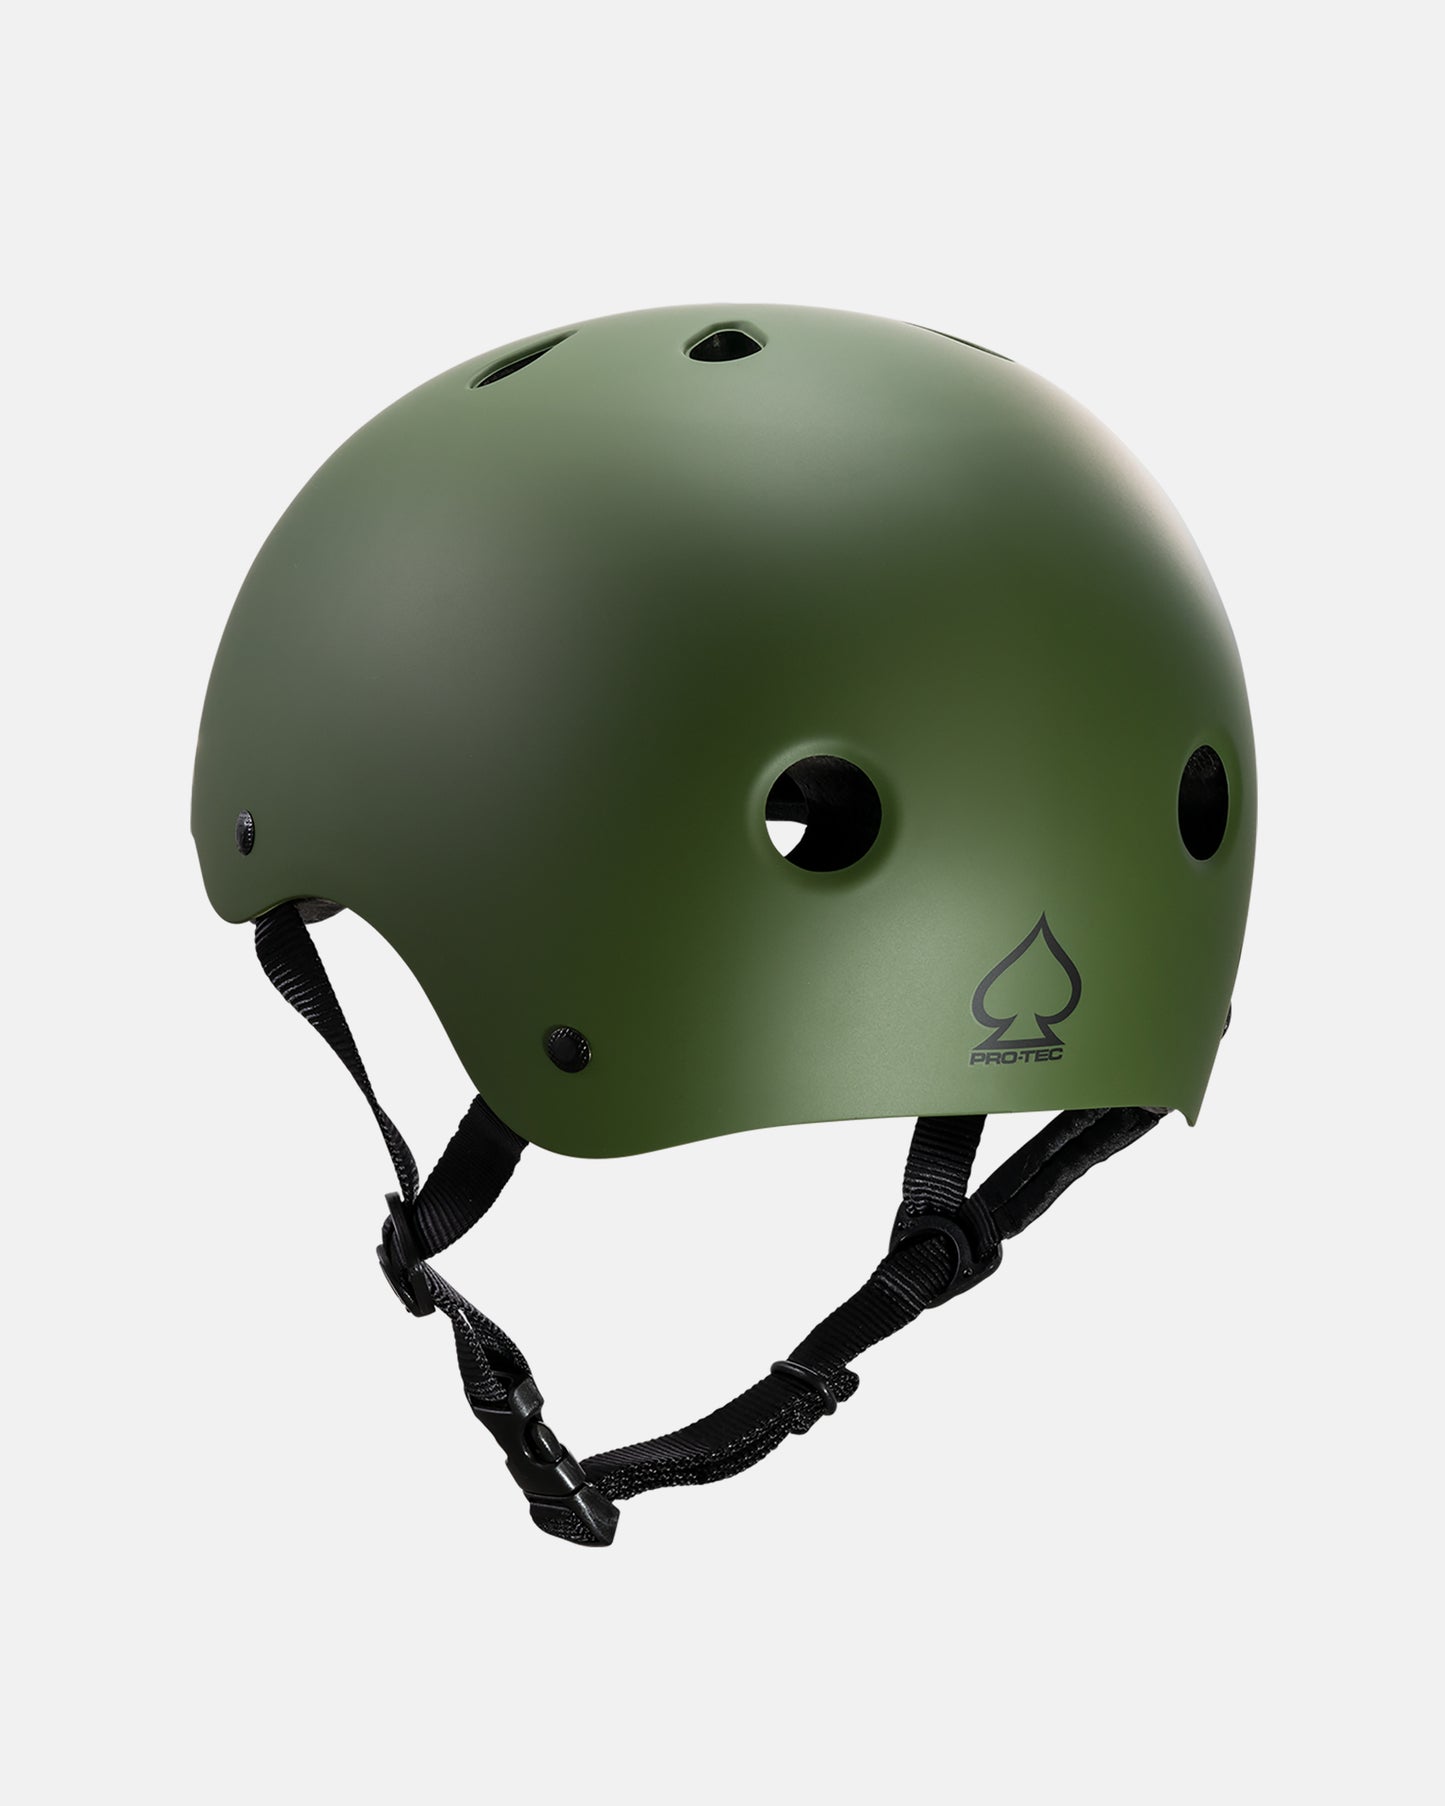 Protec Classic Helmet (Certified) - Matte Olive - Impala Rollerskates